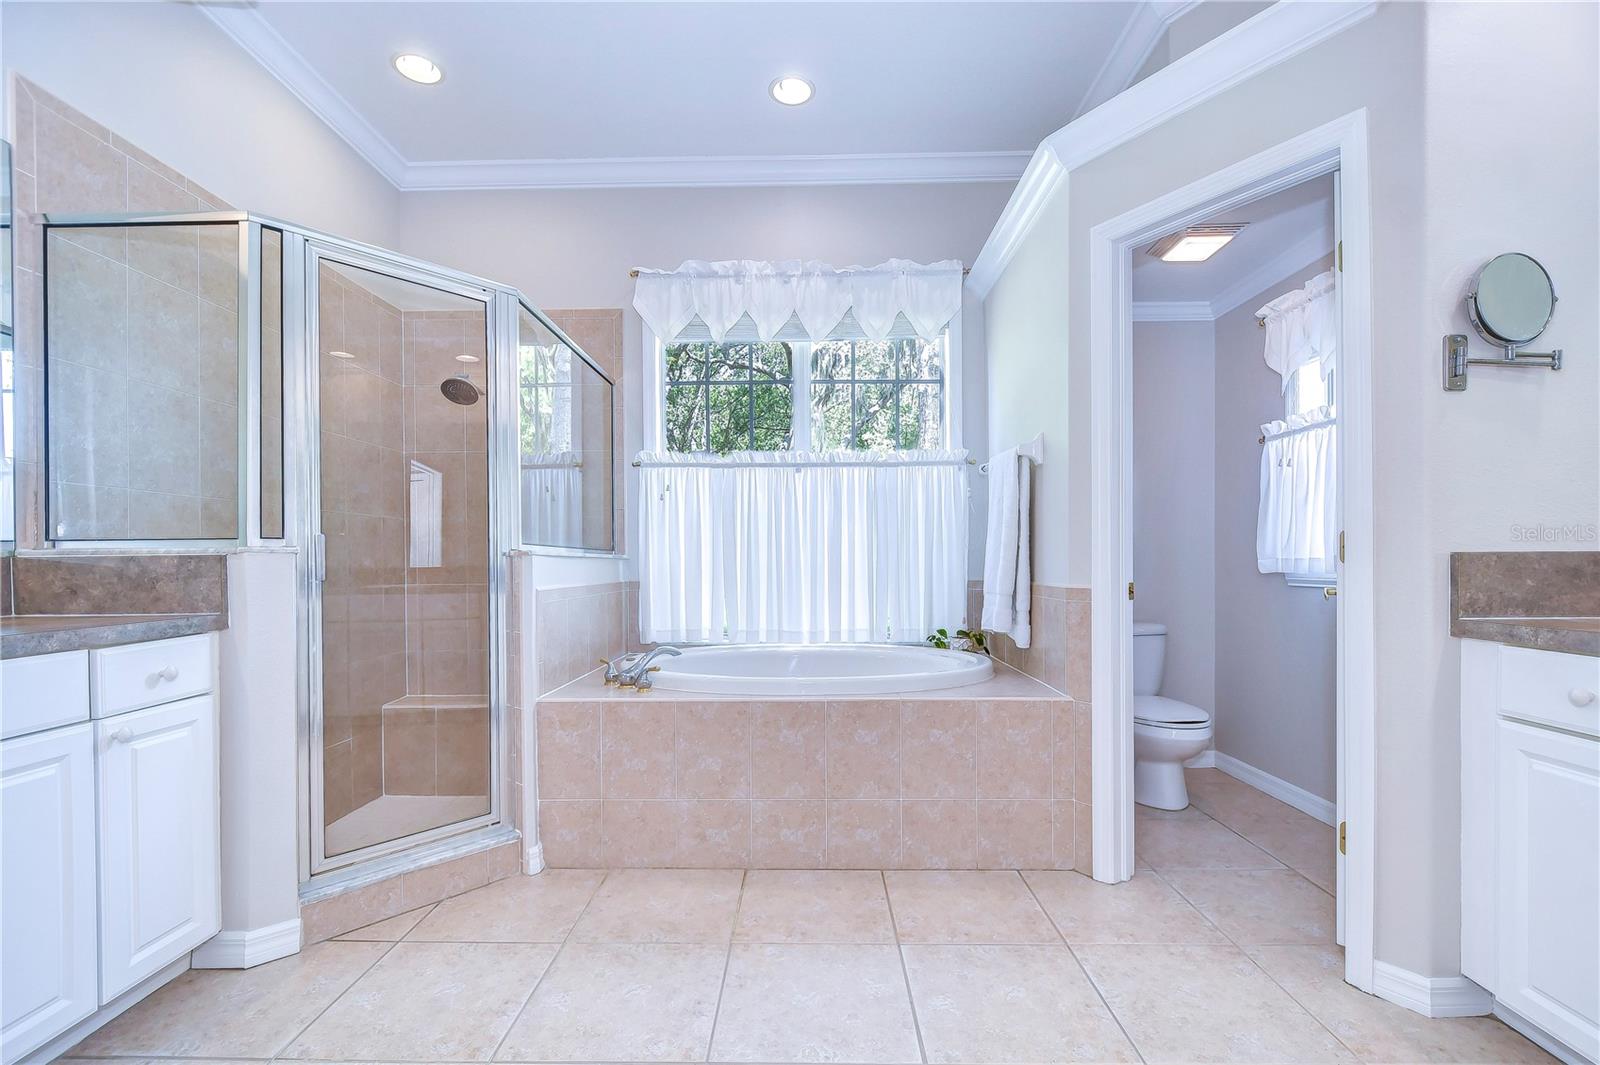 En-suite bathroom with separate vanities, jacuzzi tub, and a walk-in shower!